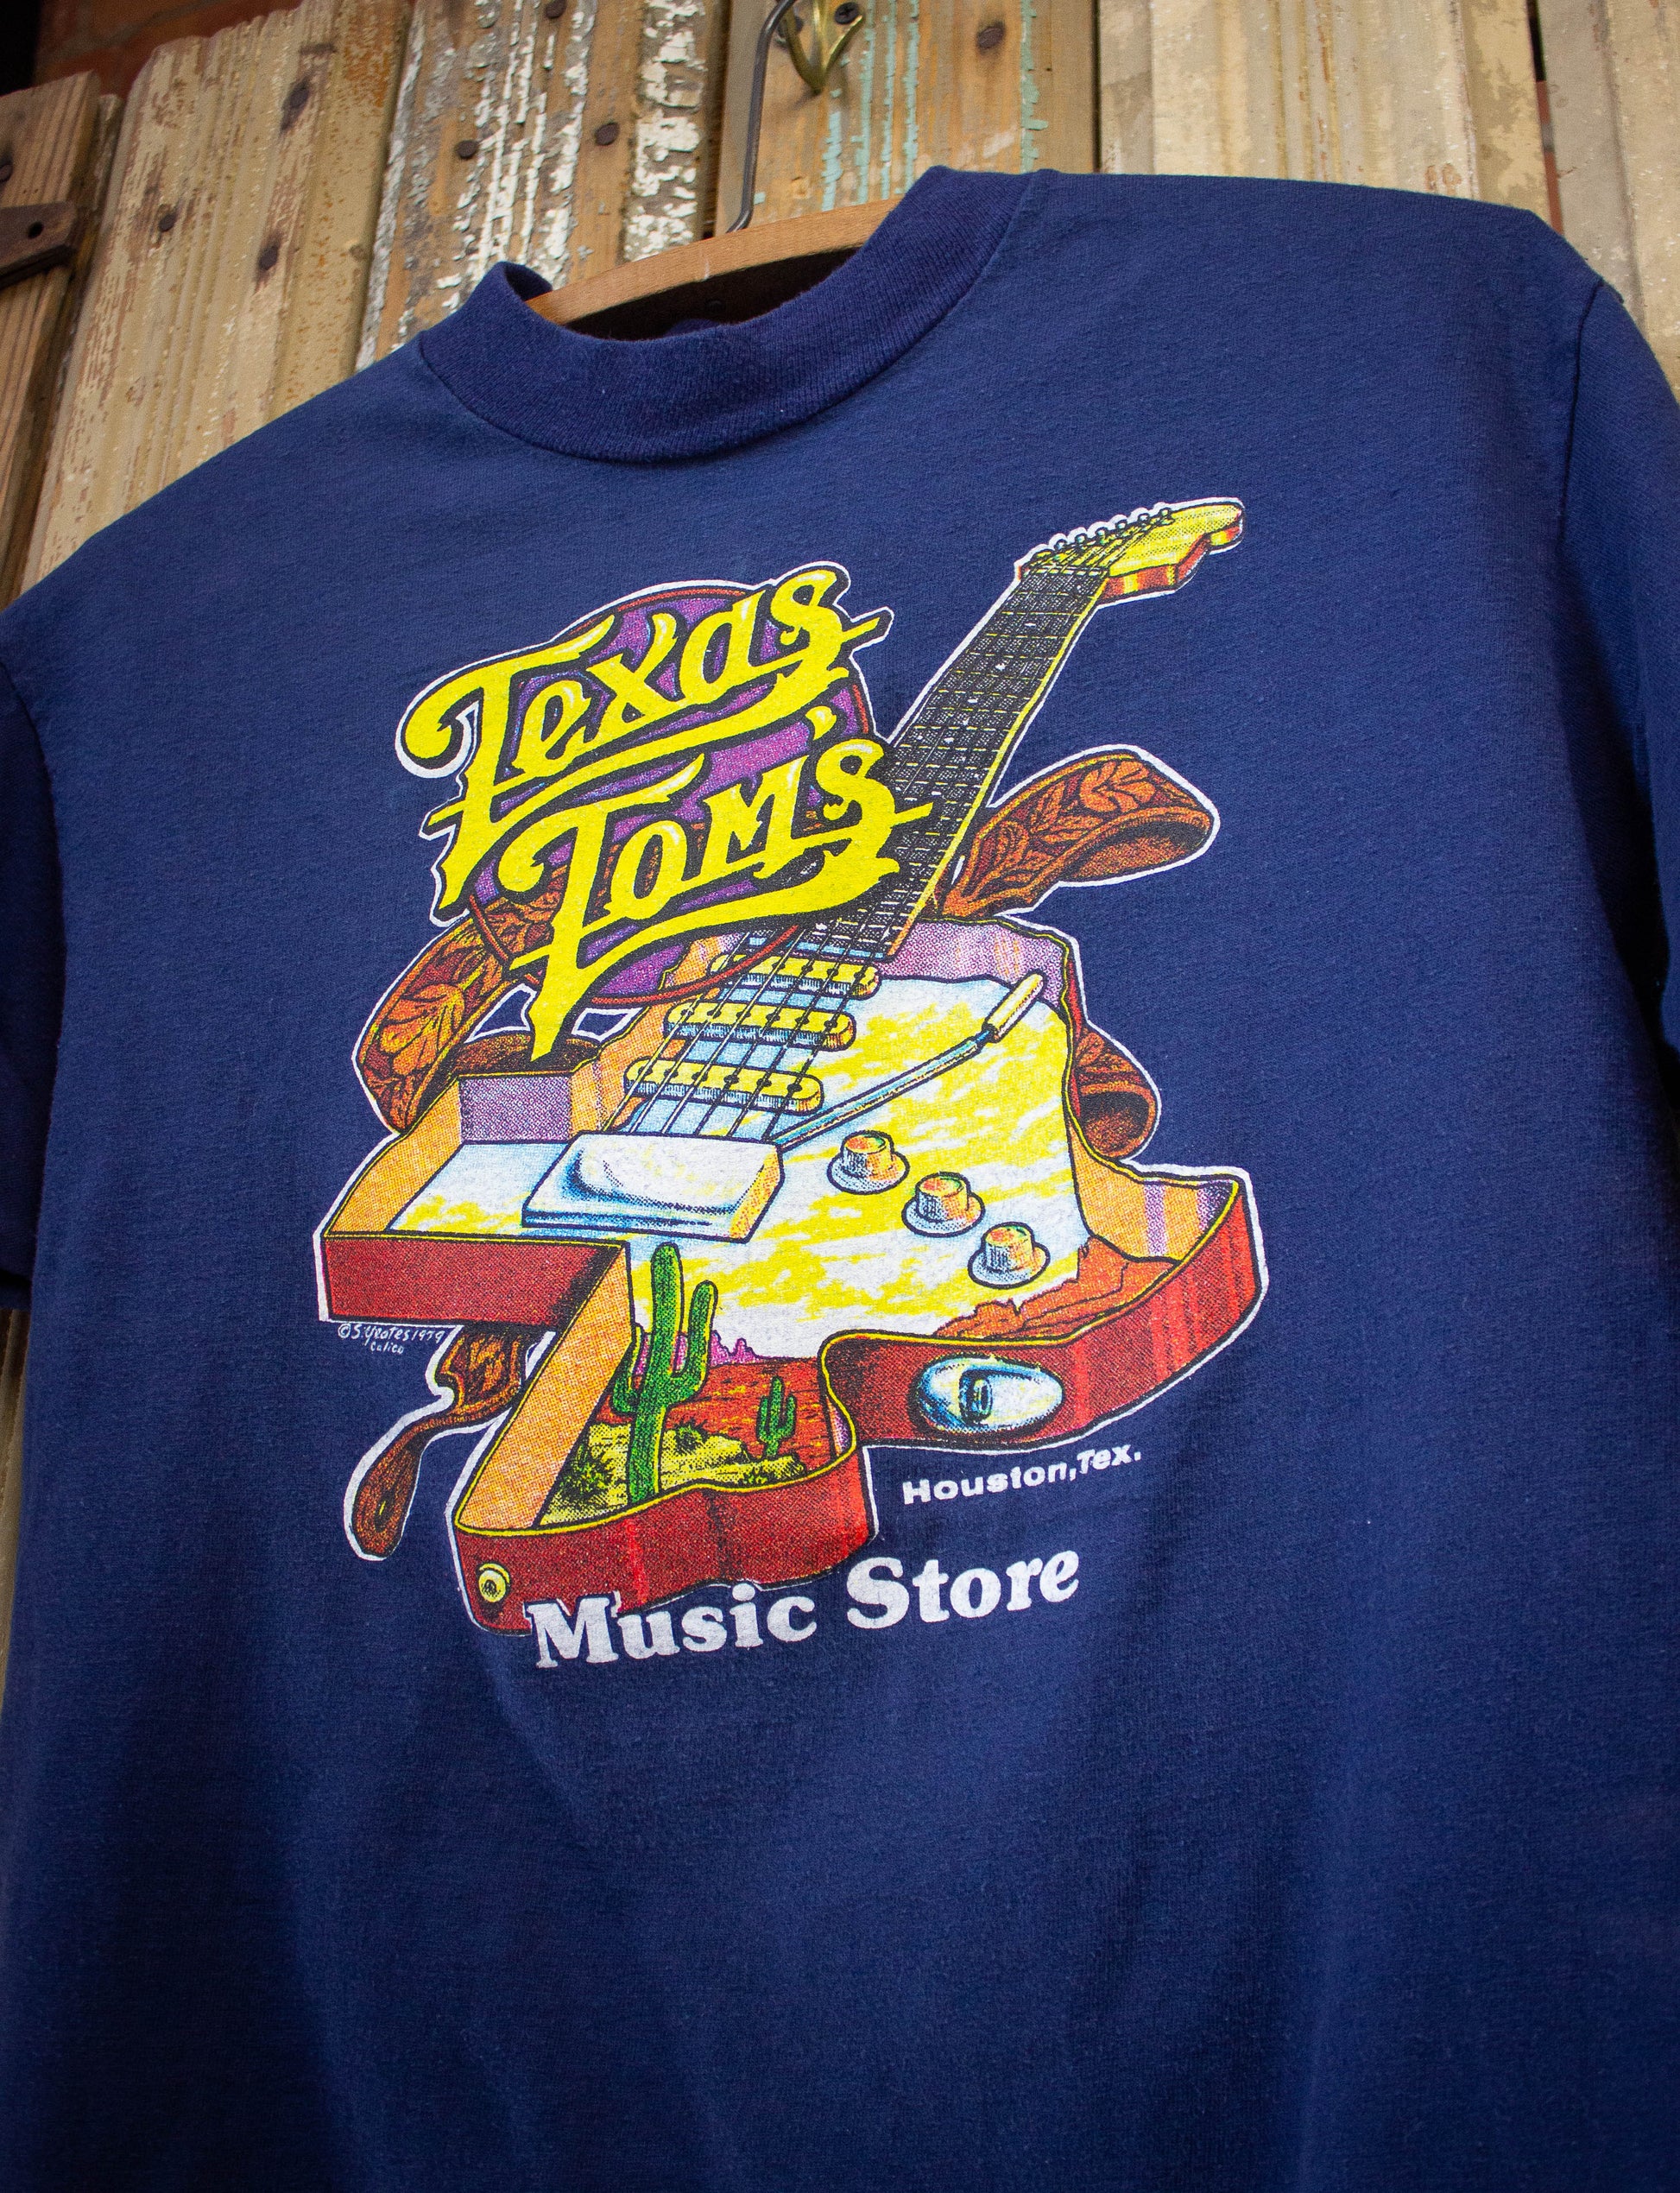 Vintage Texas Toms Graphic T-Shirt 1980s S